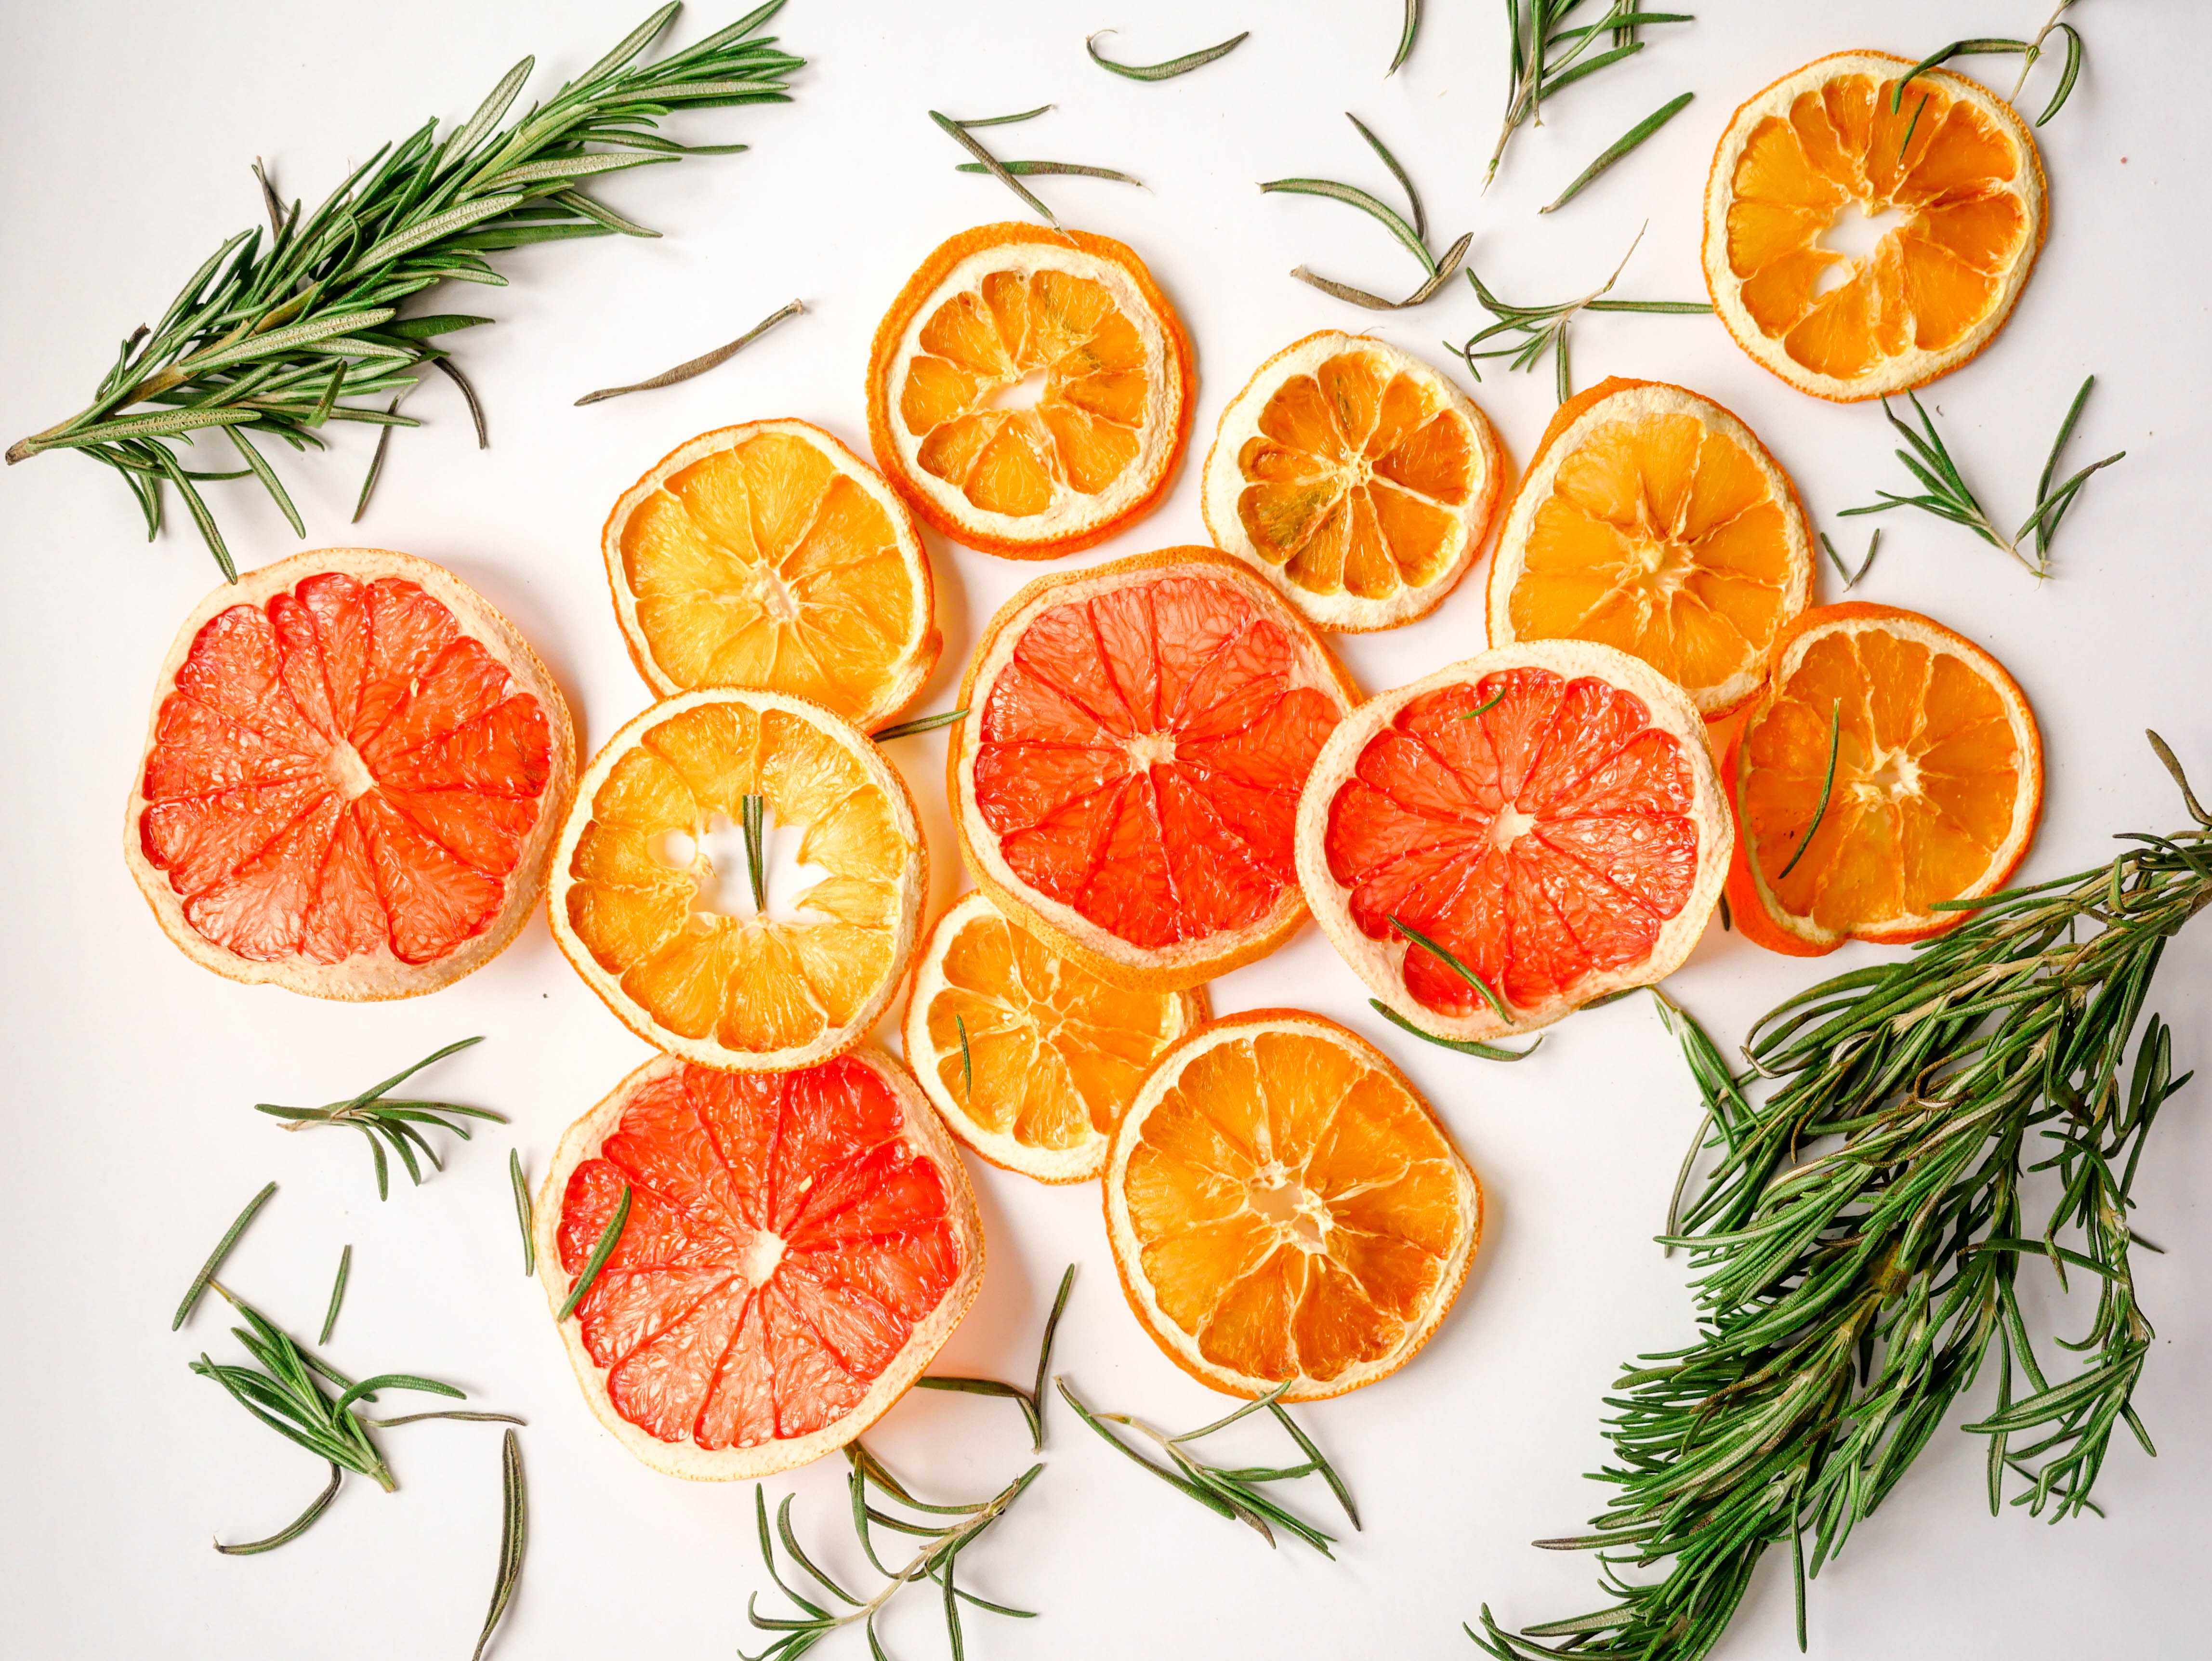 Orange has a lots of health benefits